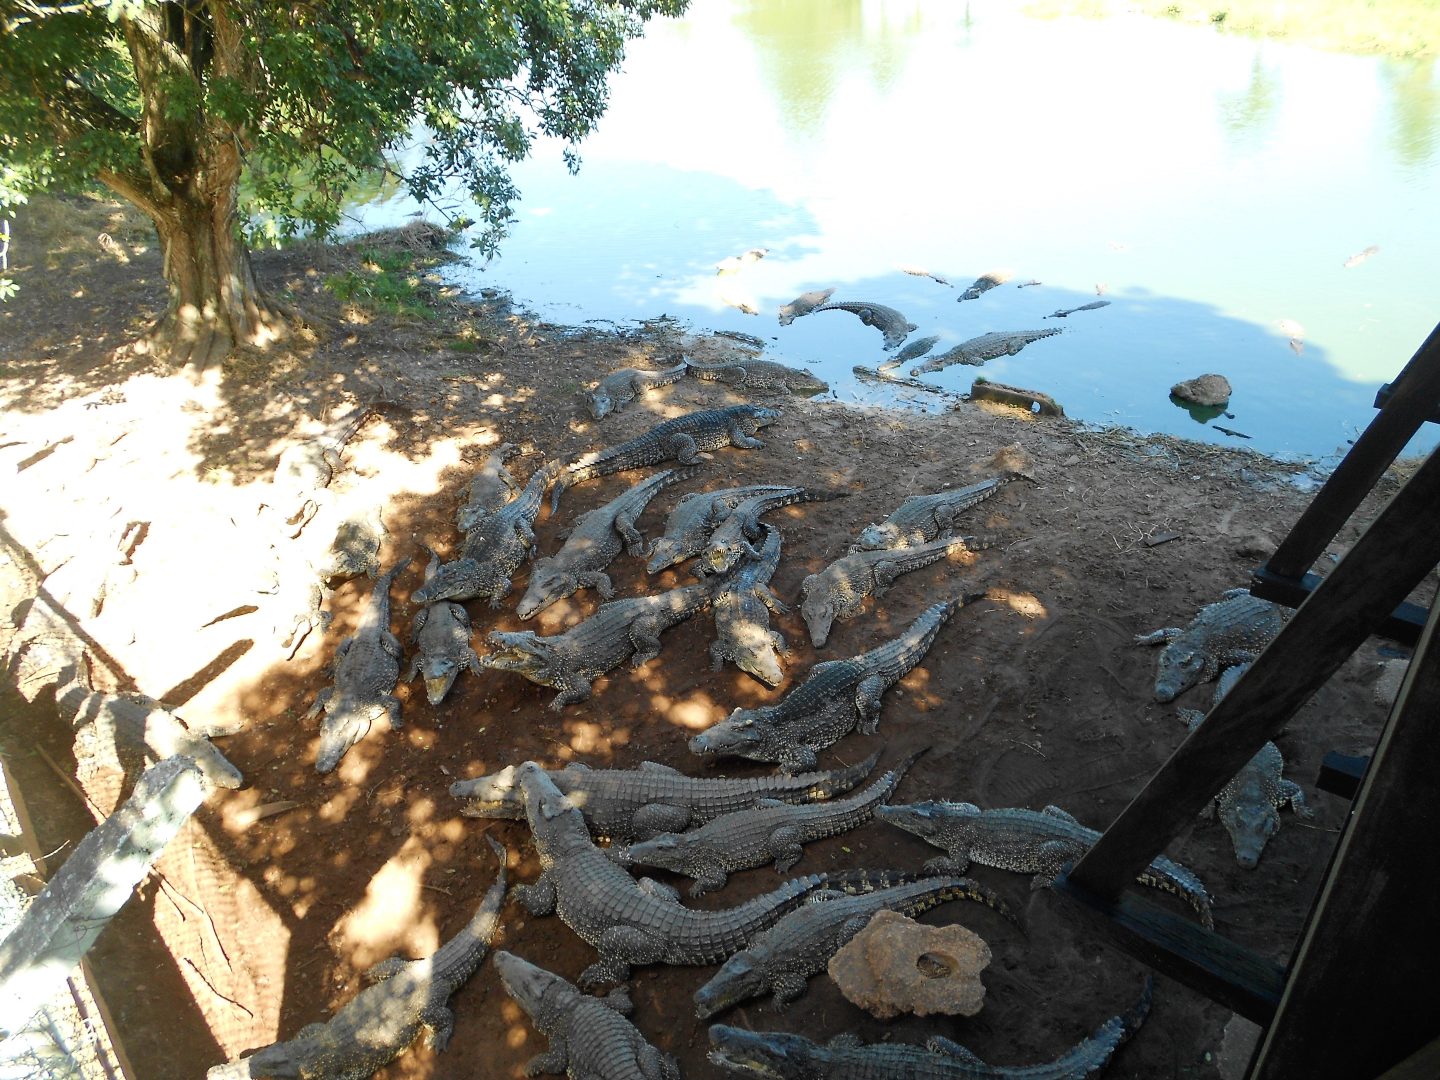 Guama Crocodile experience, Cuba